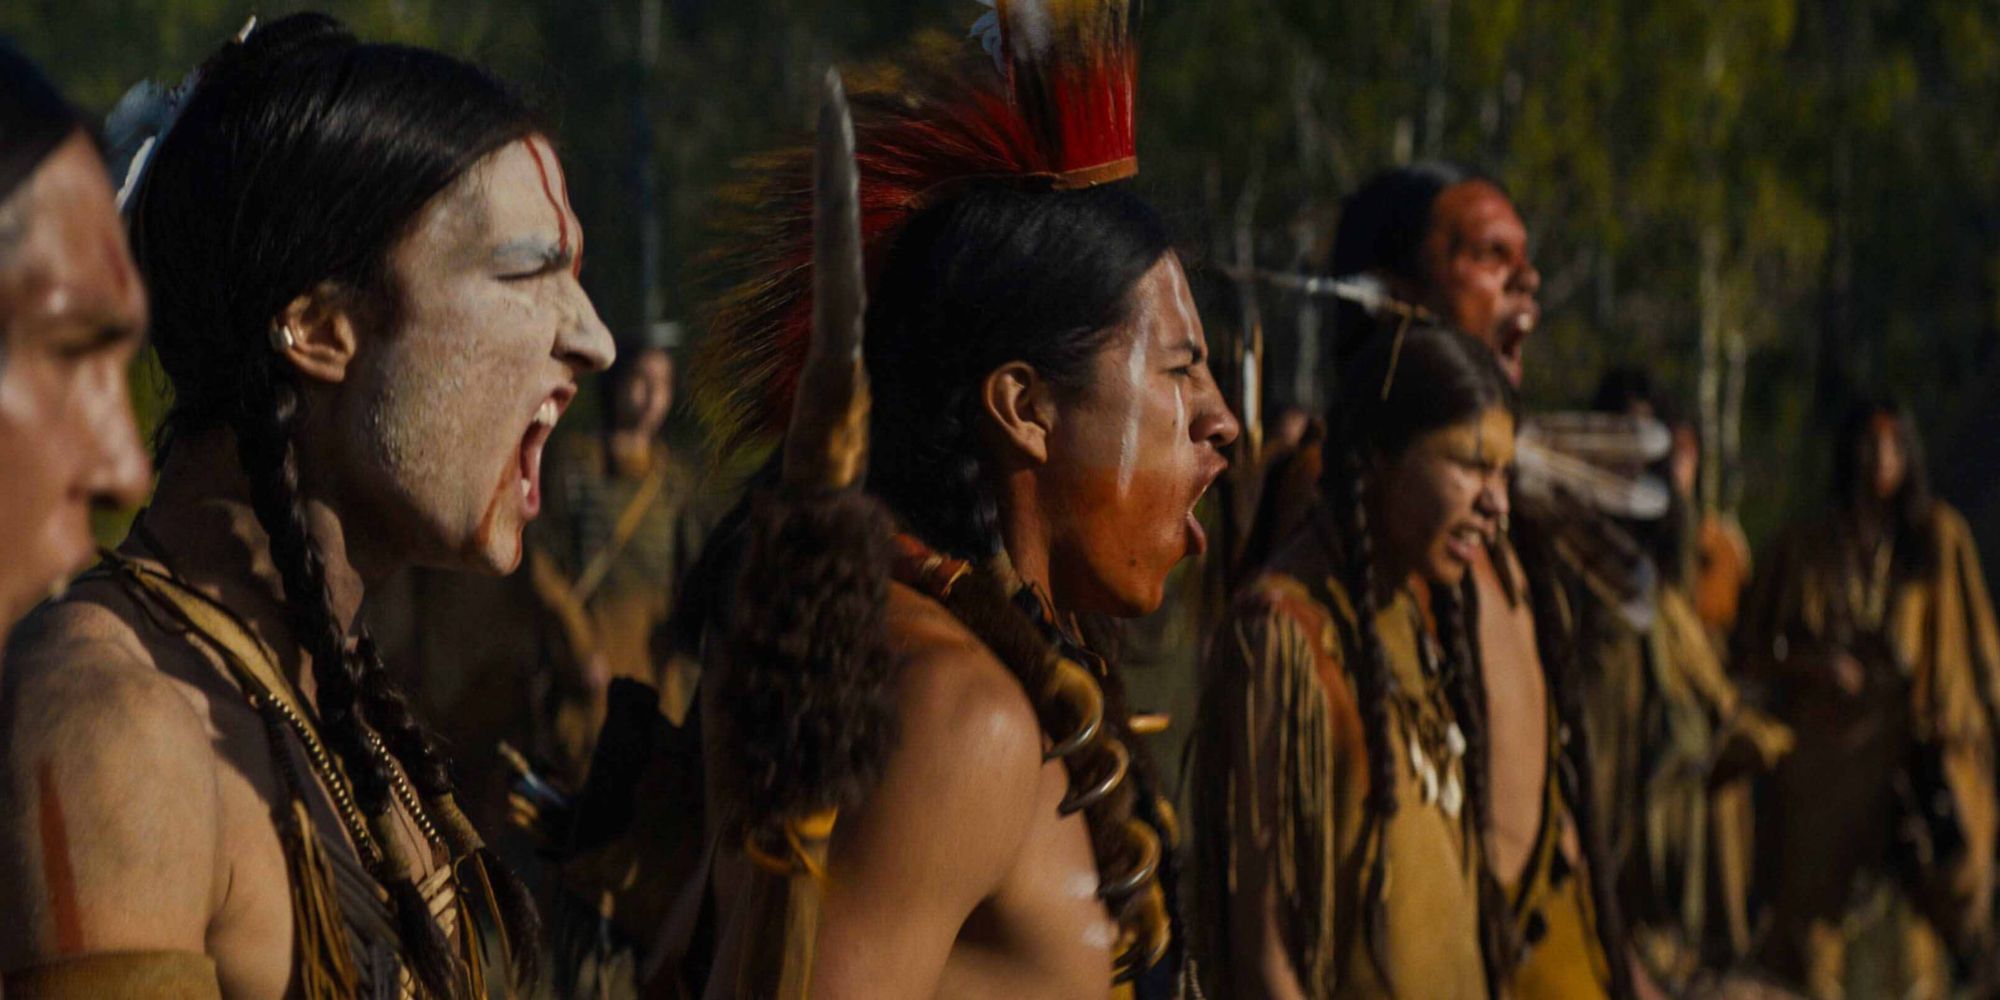 Comanche warriors unleash a war cry